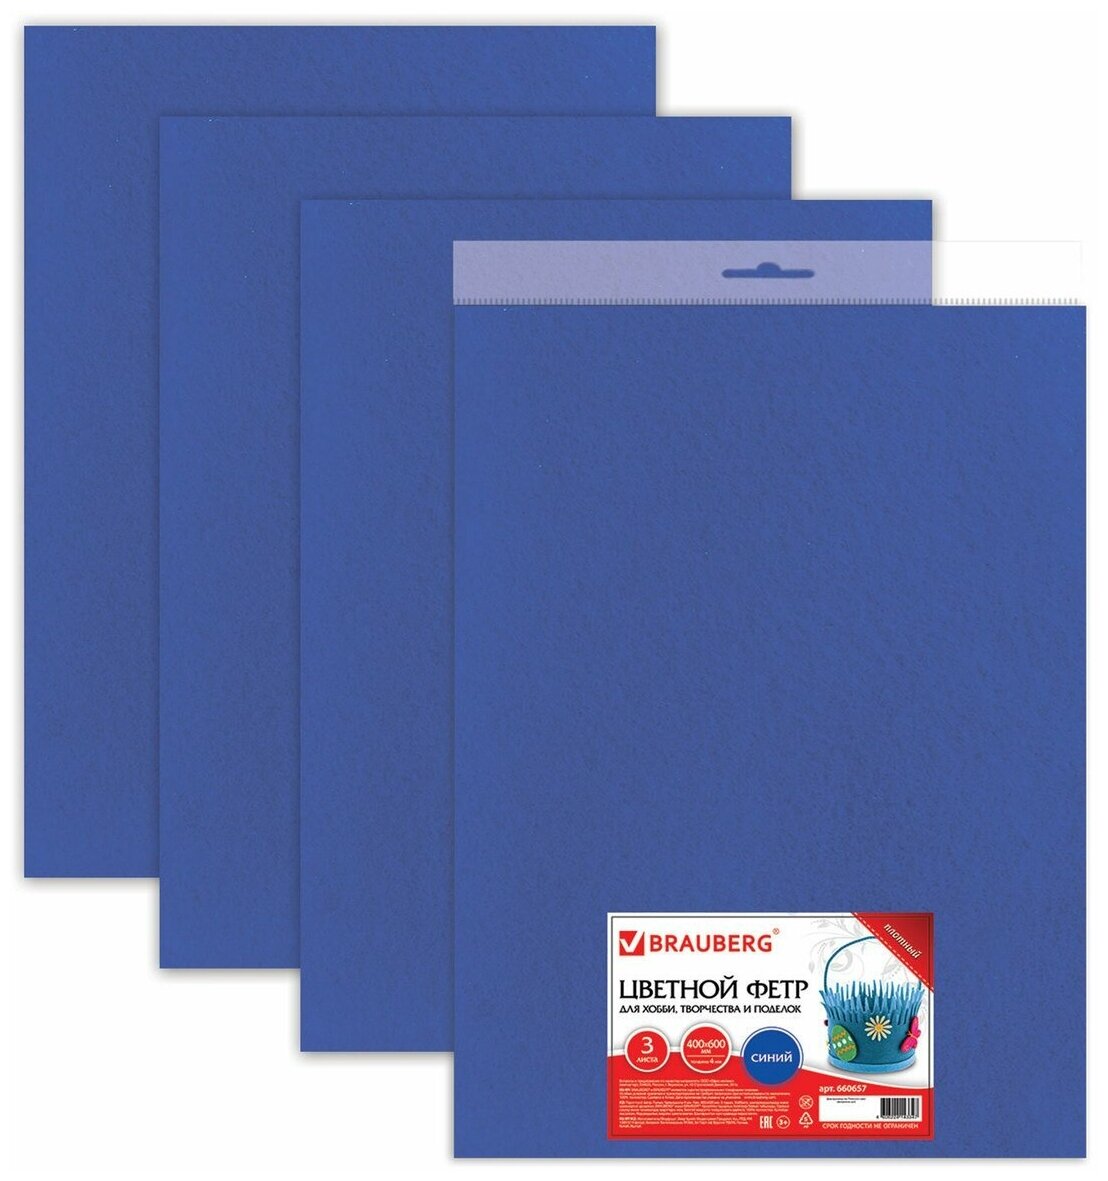 Цветной фетр Brauberg для творчества 400х600 мм 3 л, толщина 4 мм, плотный, синий (660657)